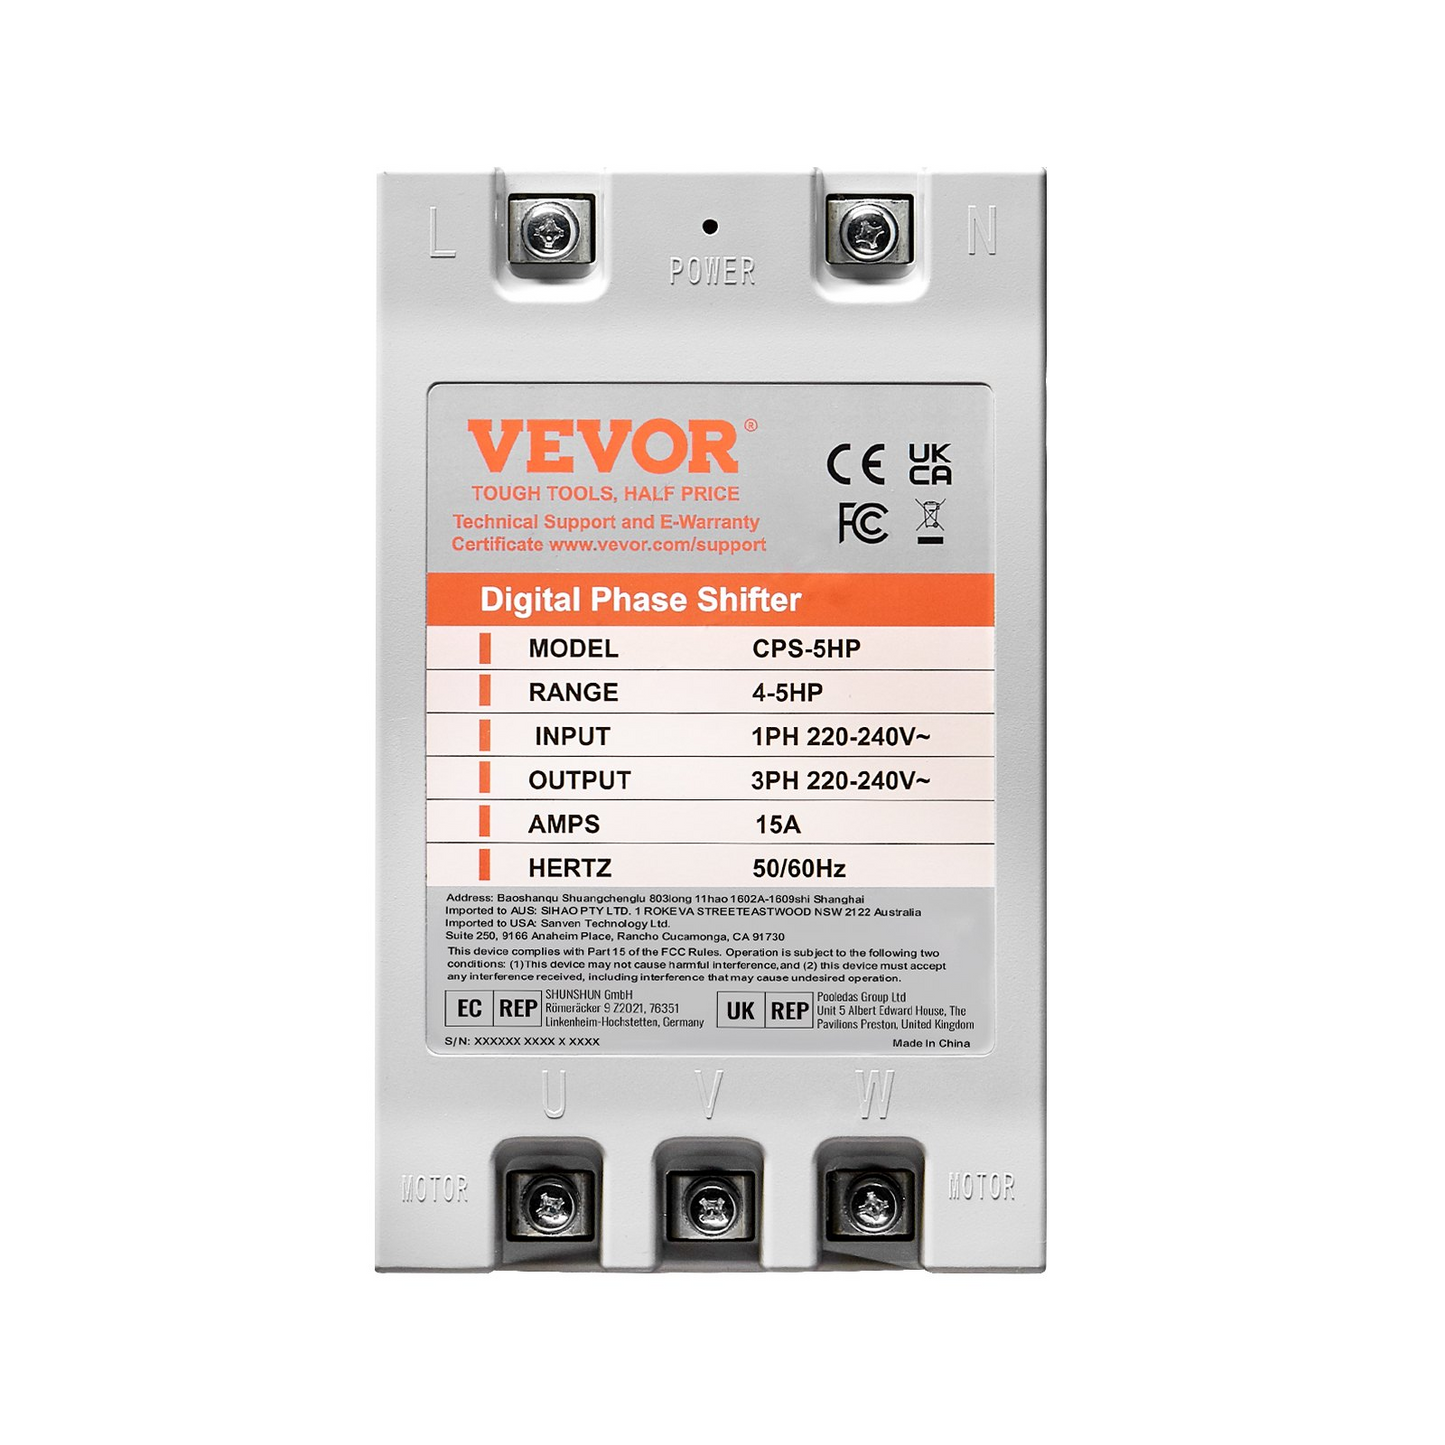 VEVOR 3 Phase Converter - 5HP 15A 220V Single Phase to 3 Phase Converter, Digital Phase Shifter for Residential and Light Commercial Use, 220V-240V Input/Output (One Converter for One Motor Only)